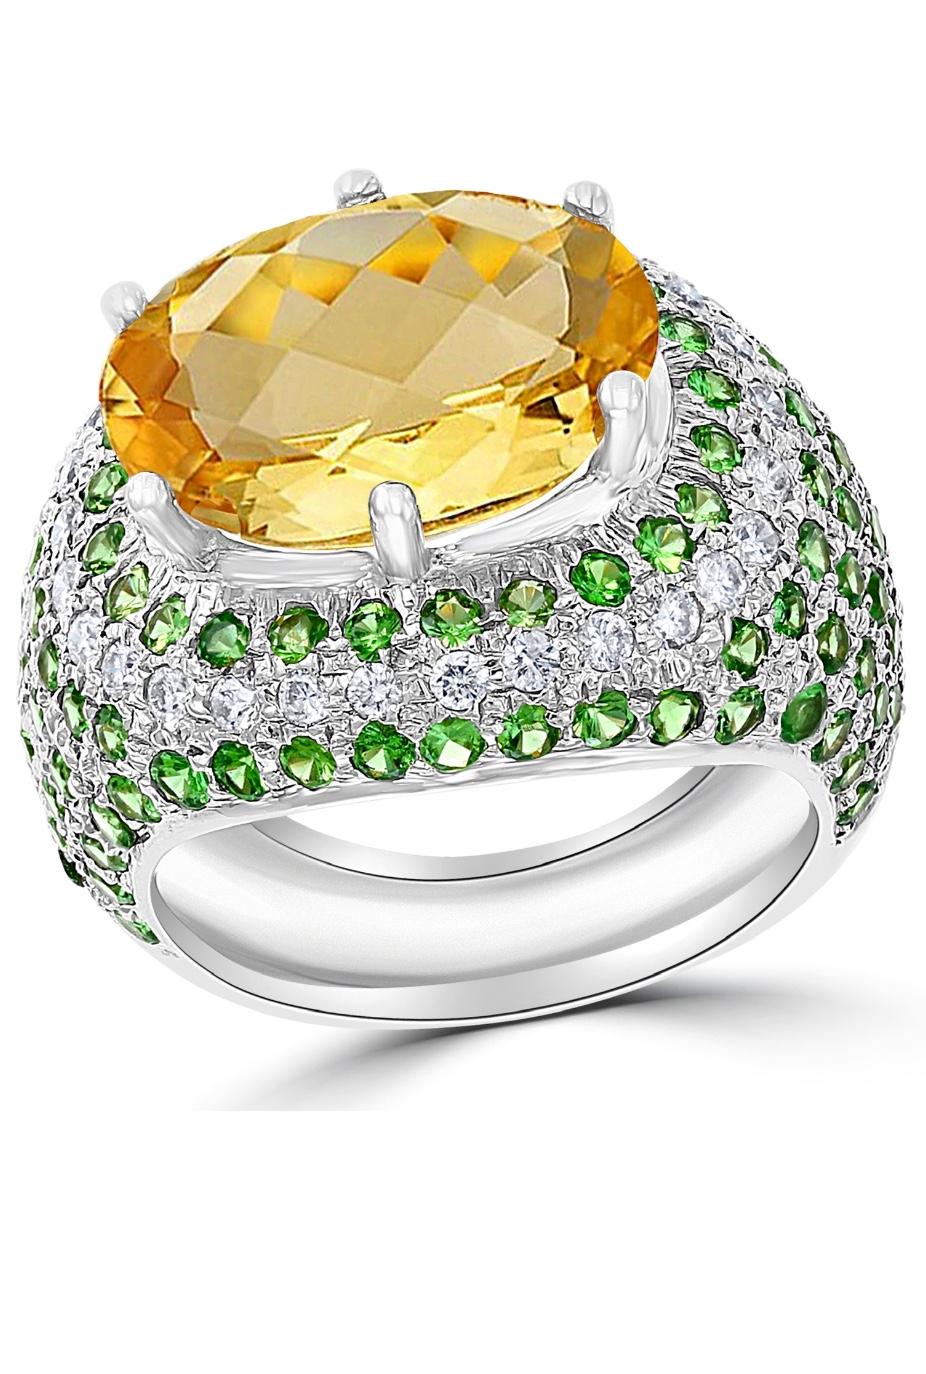 7 Carat Oval Citrine Tsavorite and Diamond Ring in 18 Karat White Gold, Estate For Sale 5